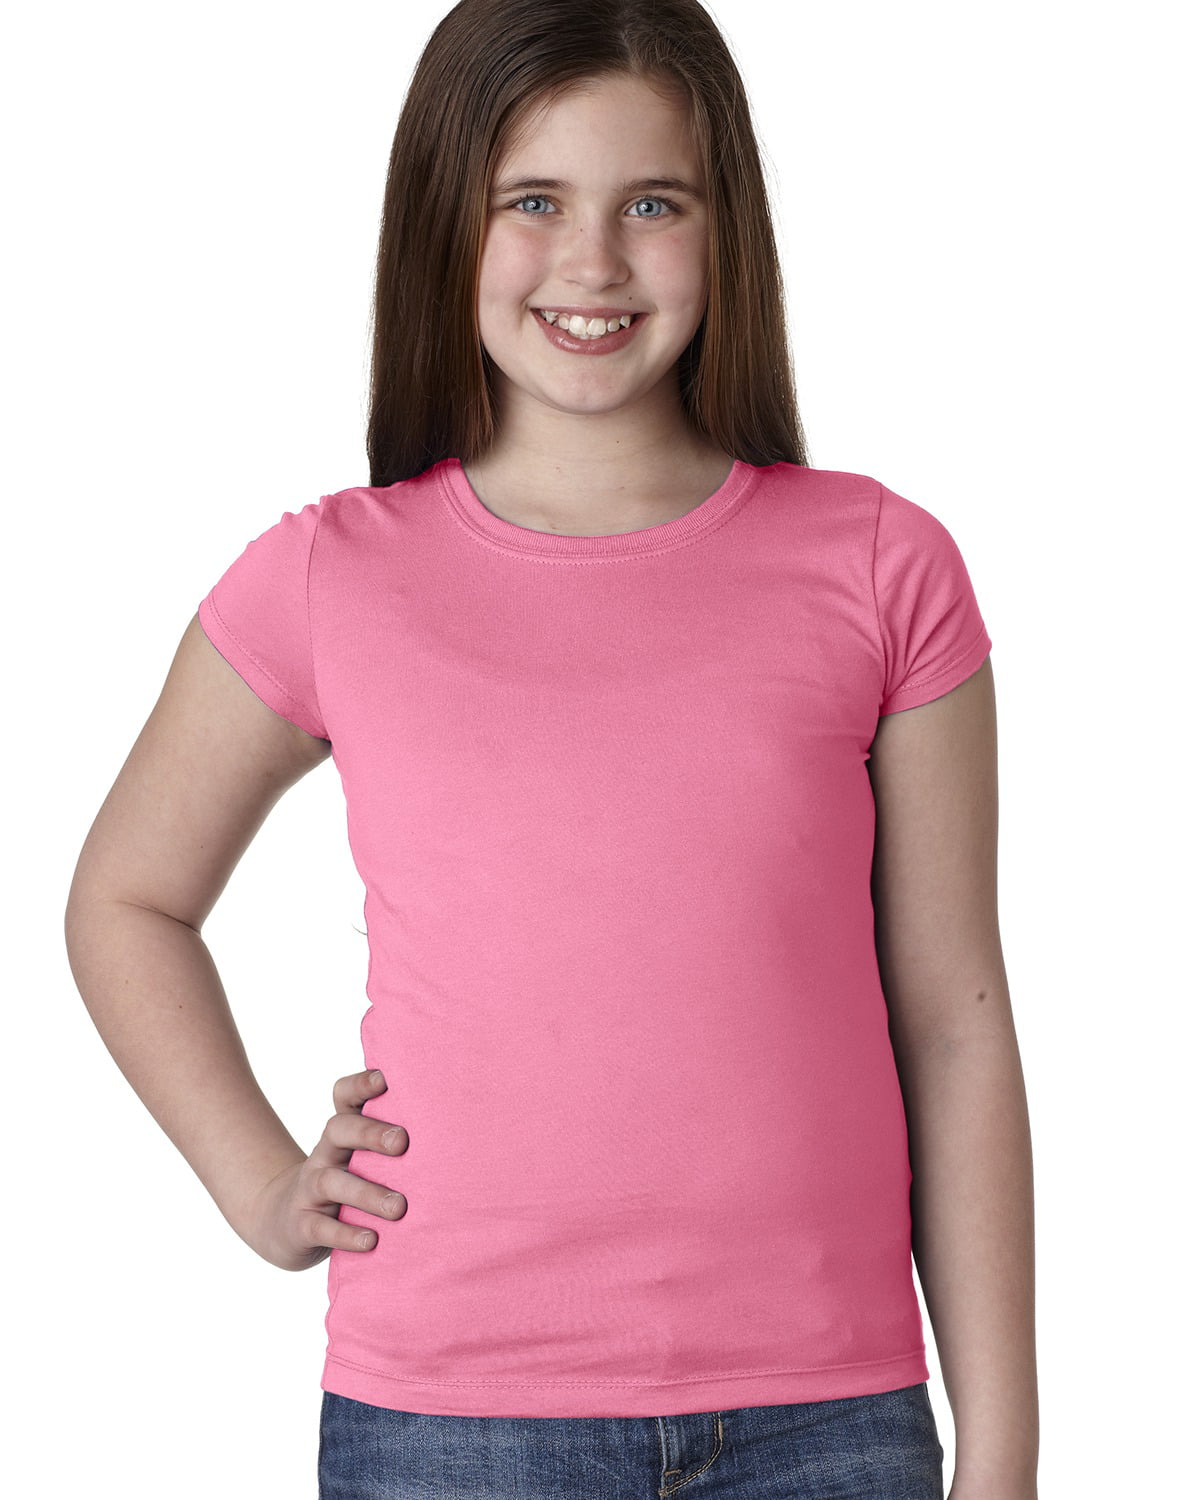 Next Level Apparel - The Next Level Girls Princess T-Shirt - HOT PINK - S